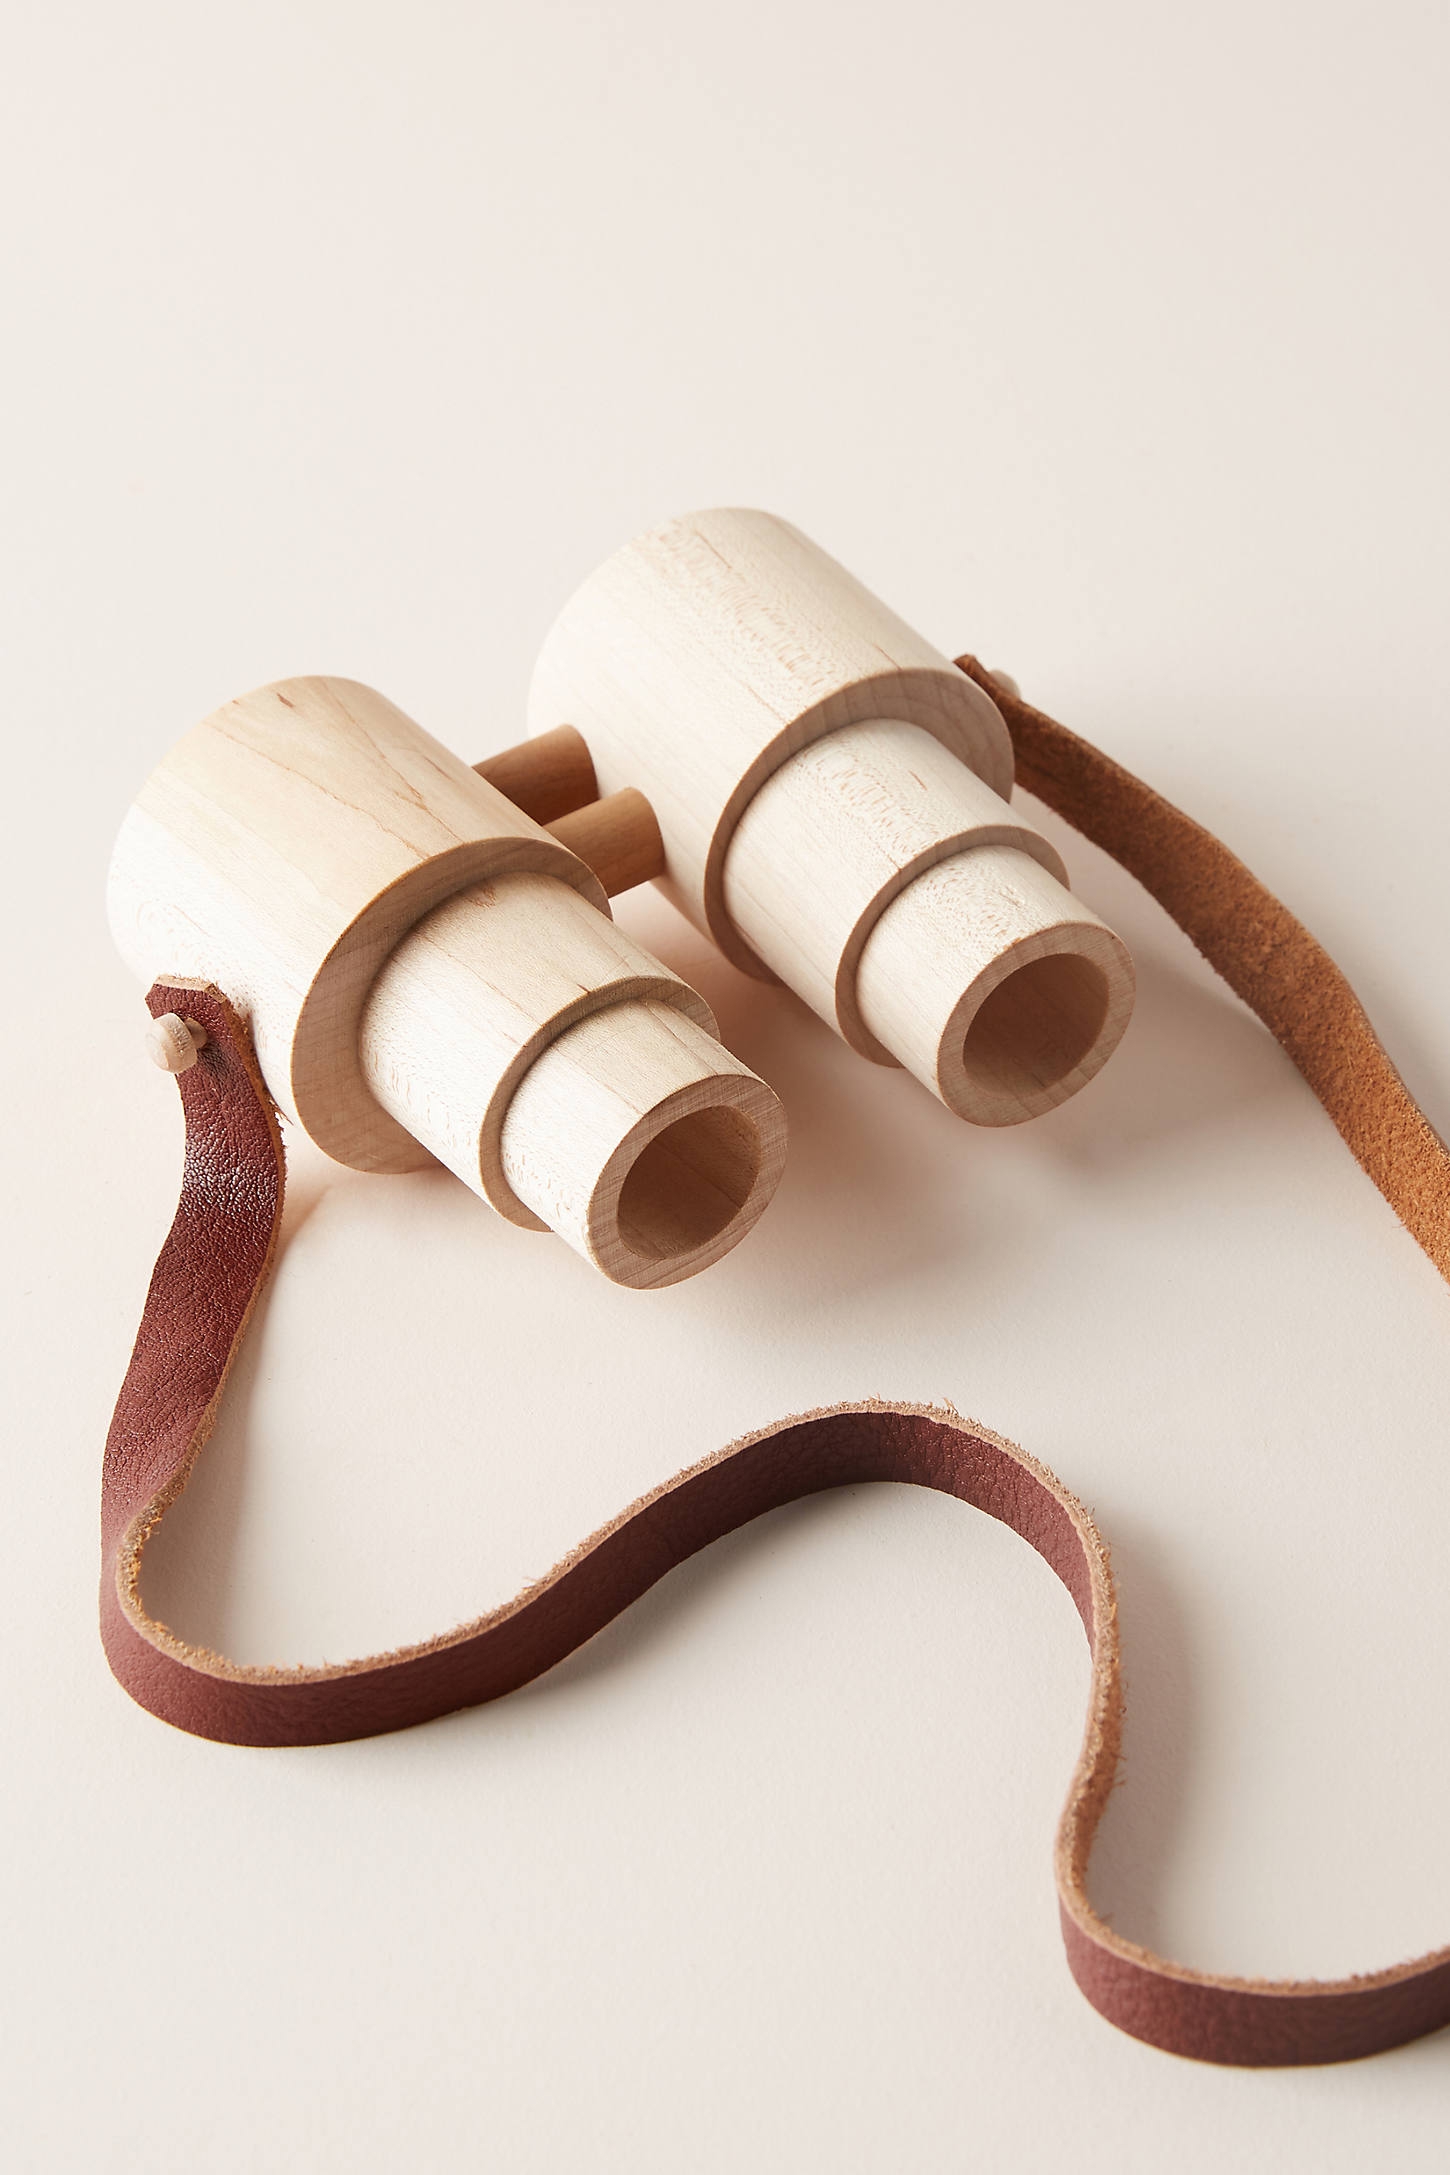 Wooden Binoculars Toy - Image 0